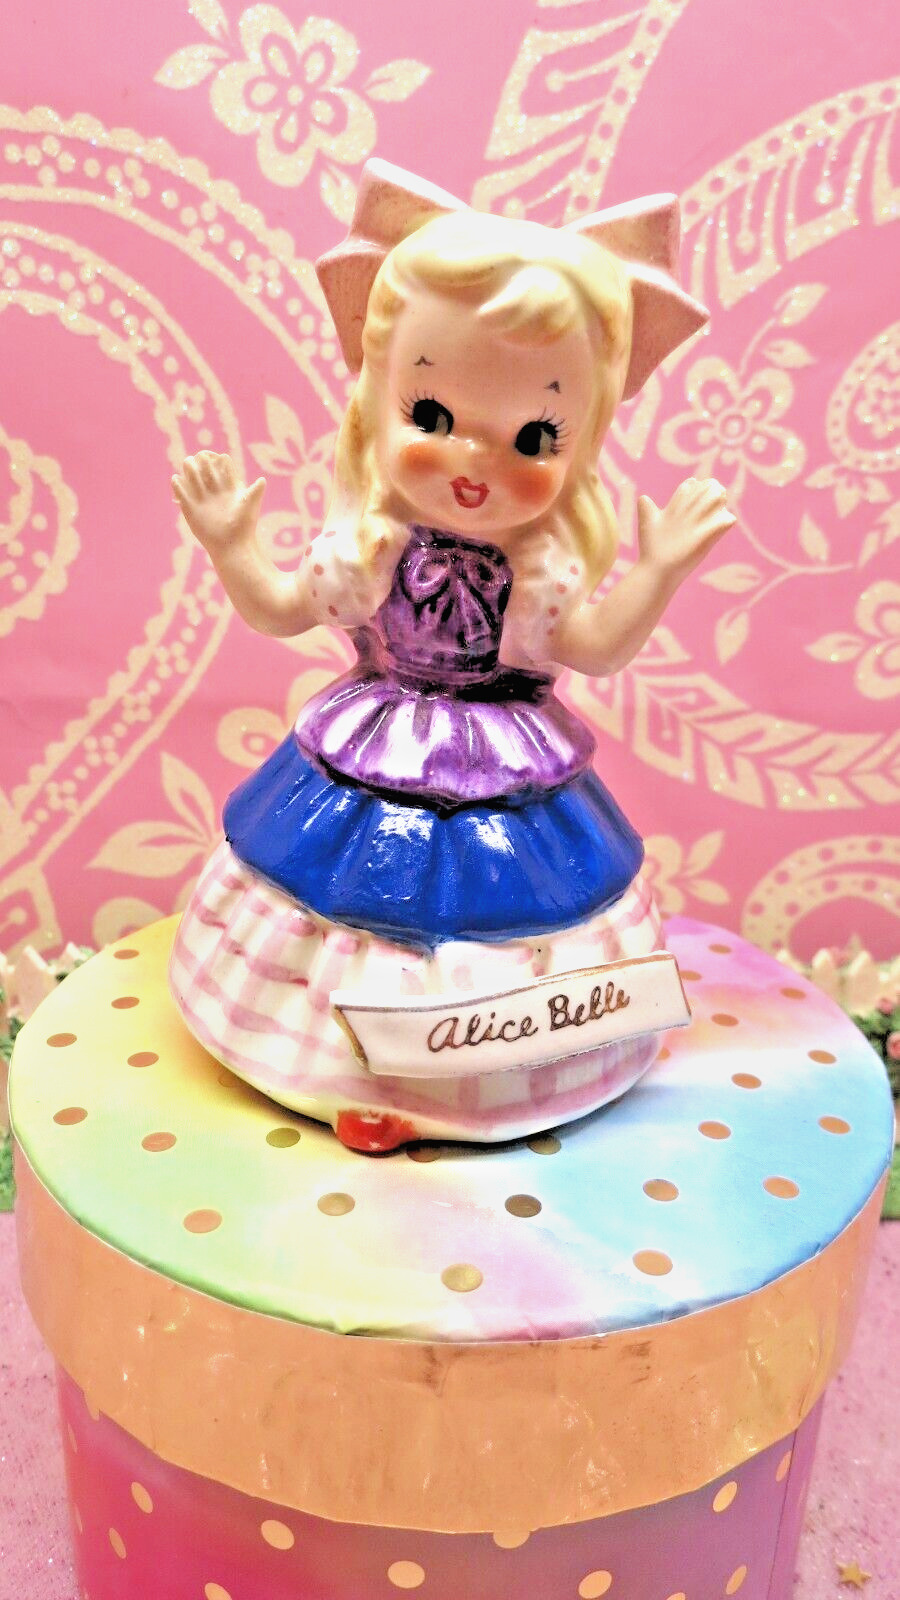 Vtg ARMARK Alice in Wonderland BELLE Nursery Rhyme Girl BELL Original With Label